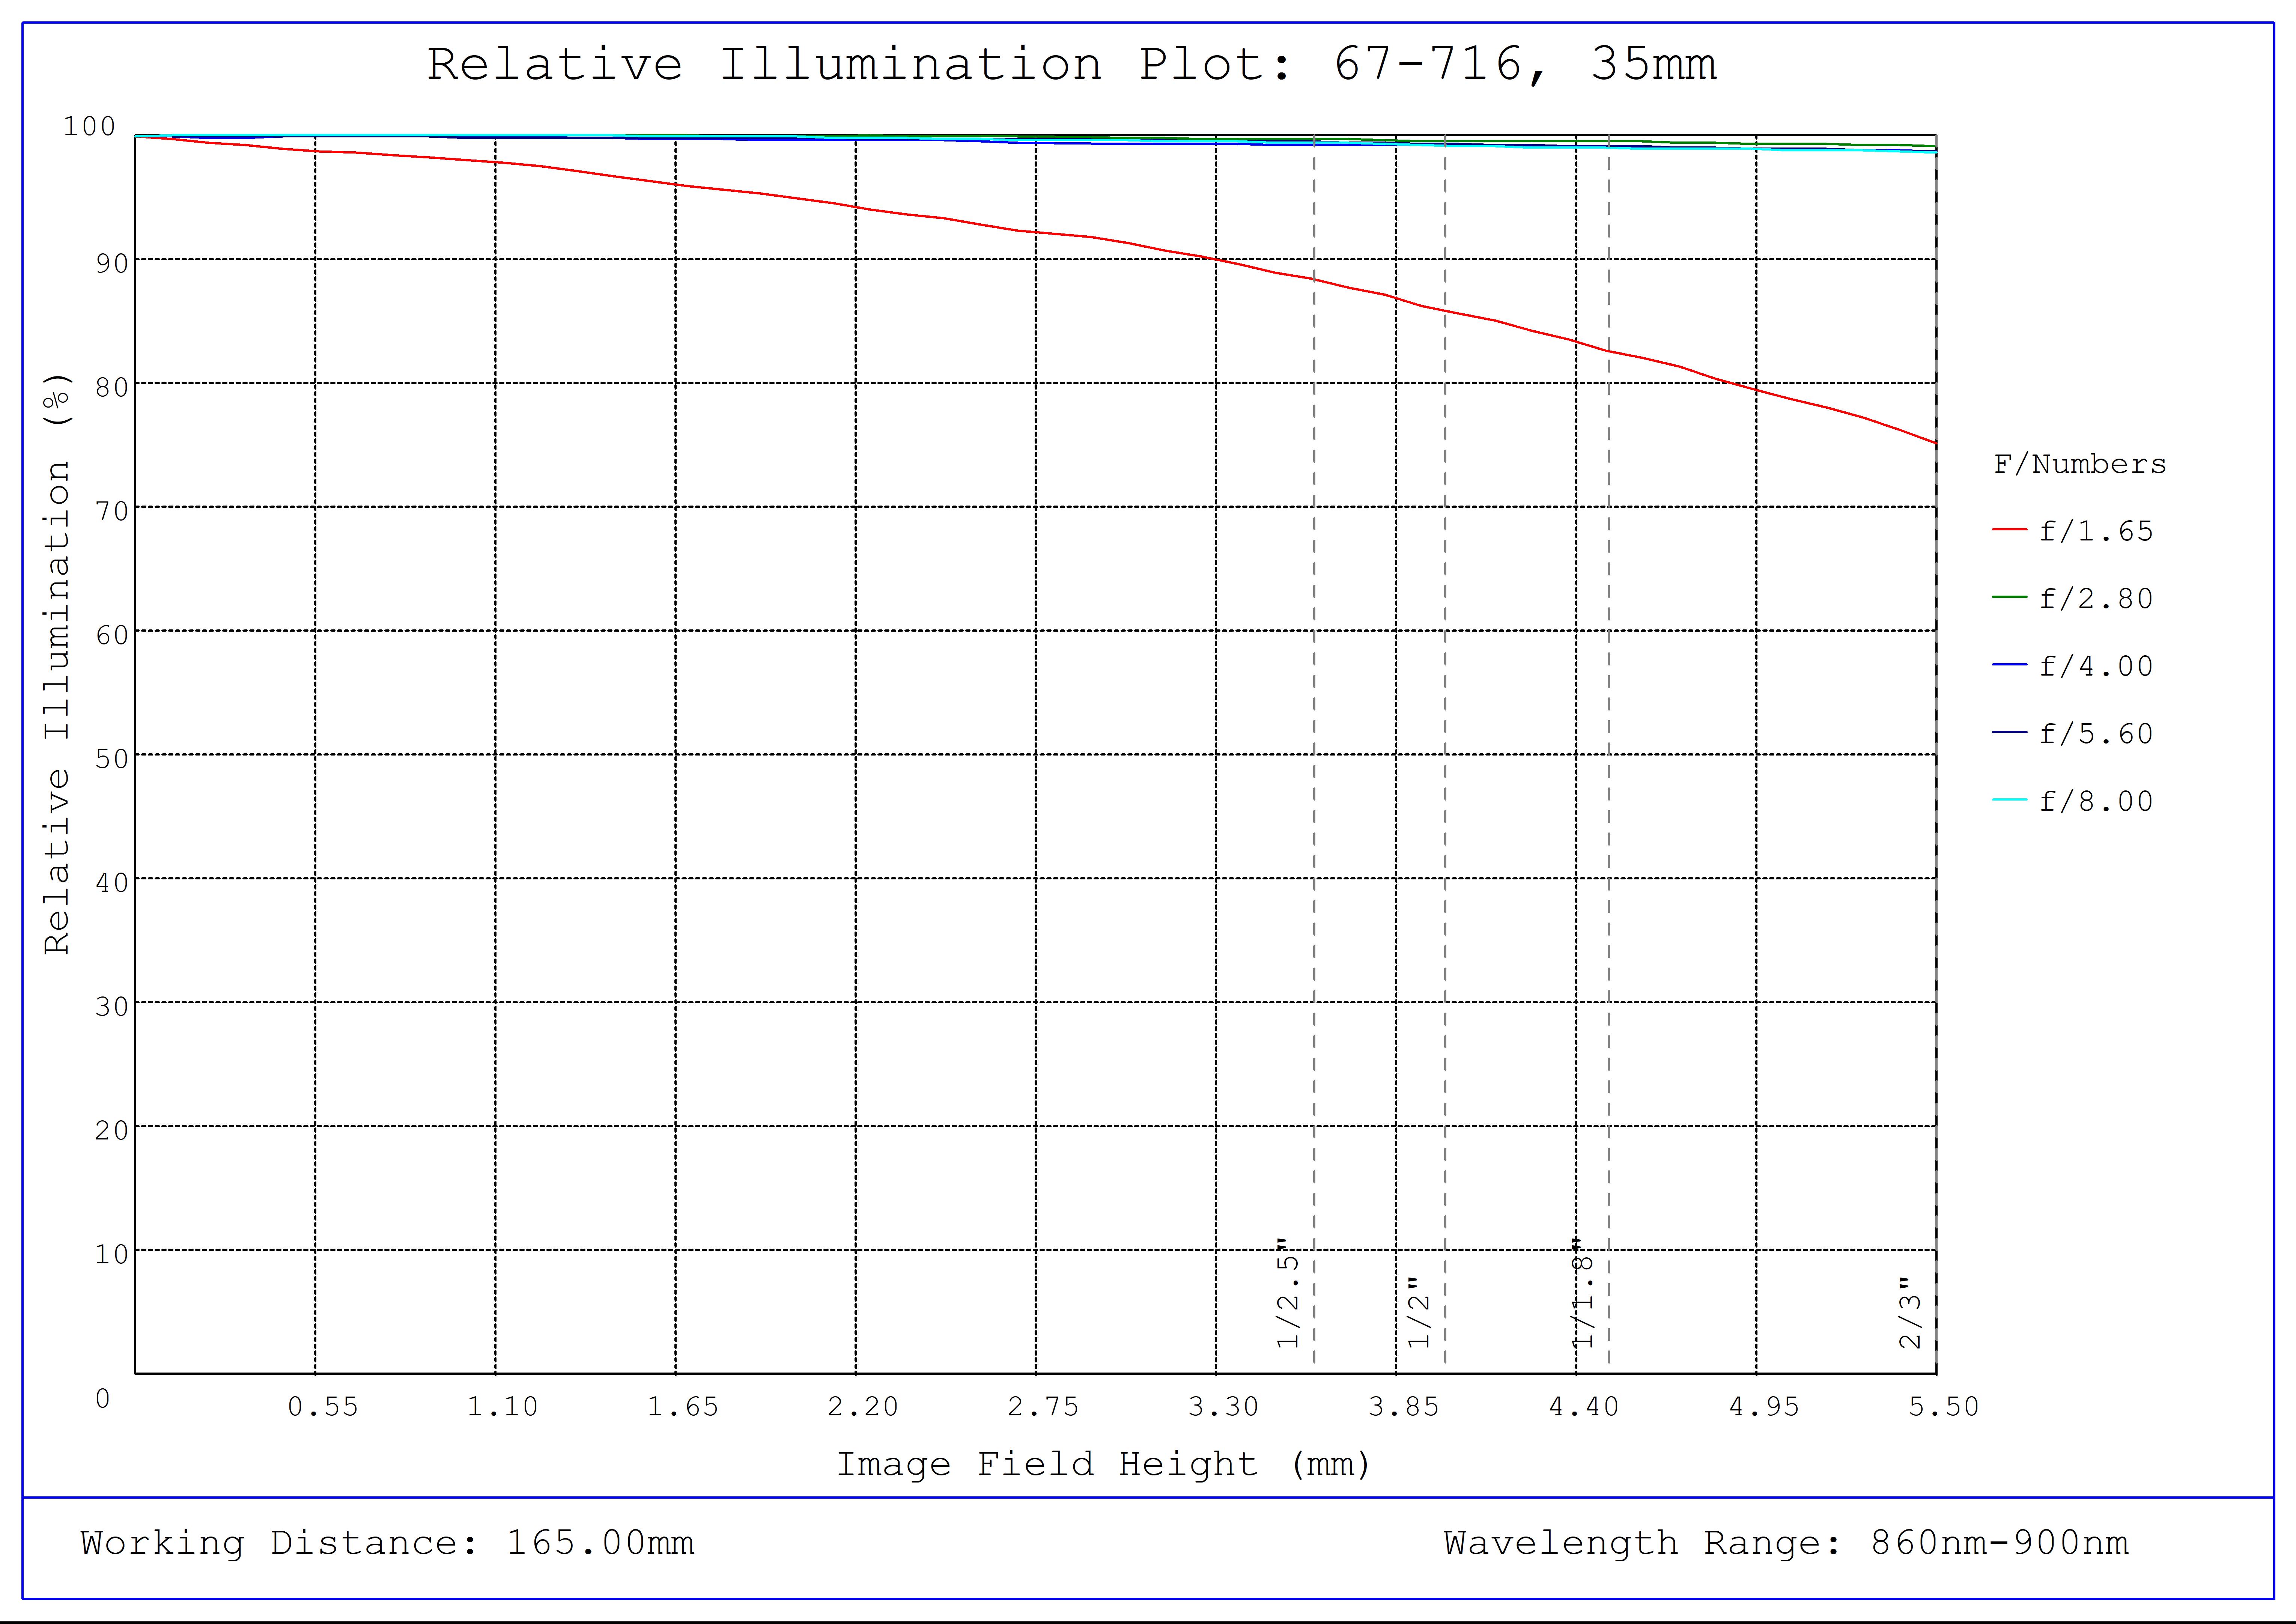 #67-716, 35mm C VIS-NIR Series Fixed Focal Length Lens, Relative Illumination Plot (NIR)